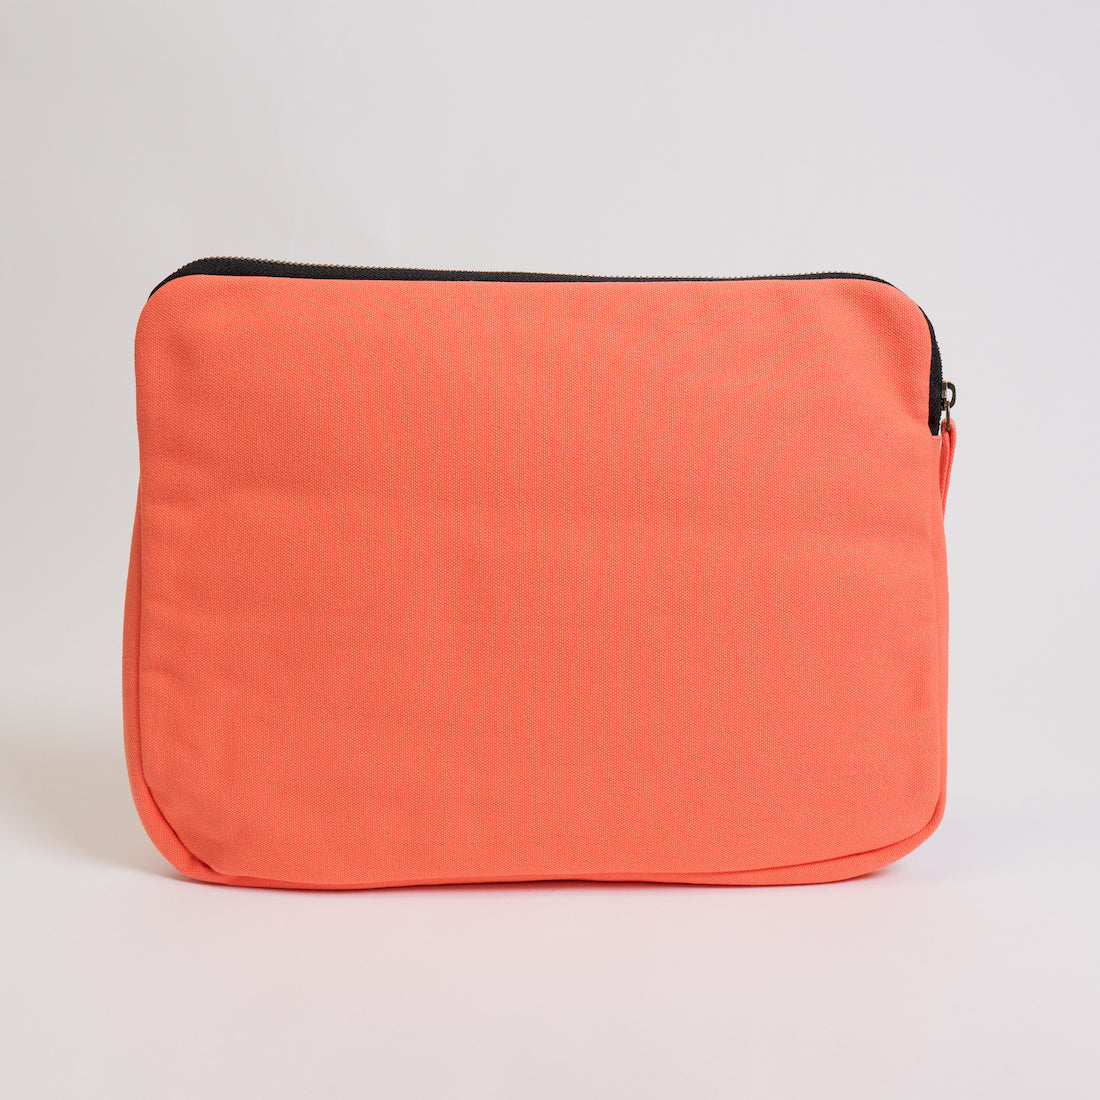 macbook air 13 inch case pink